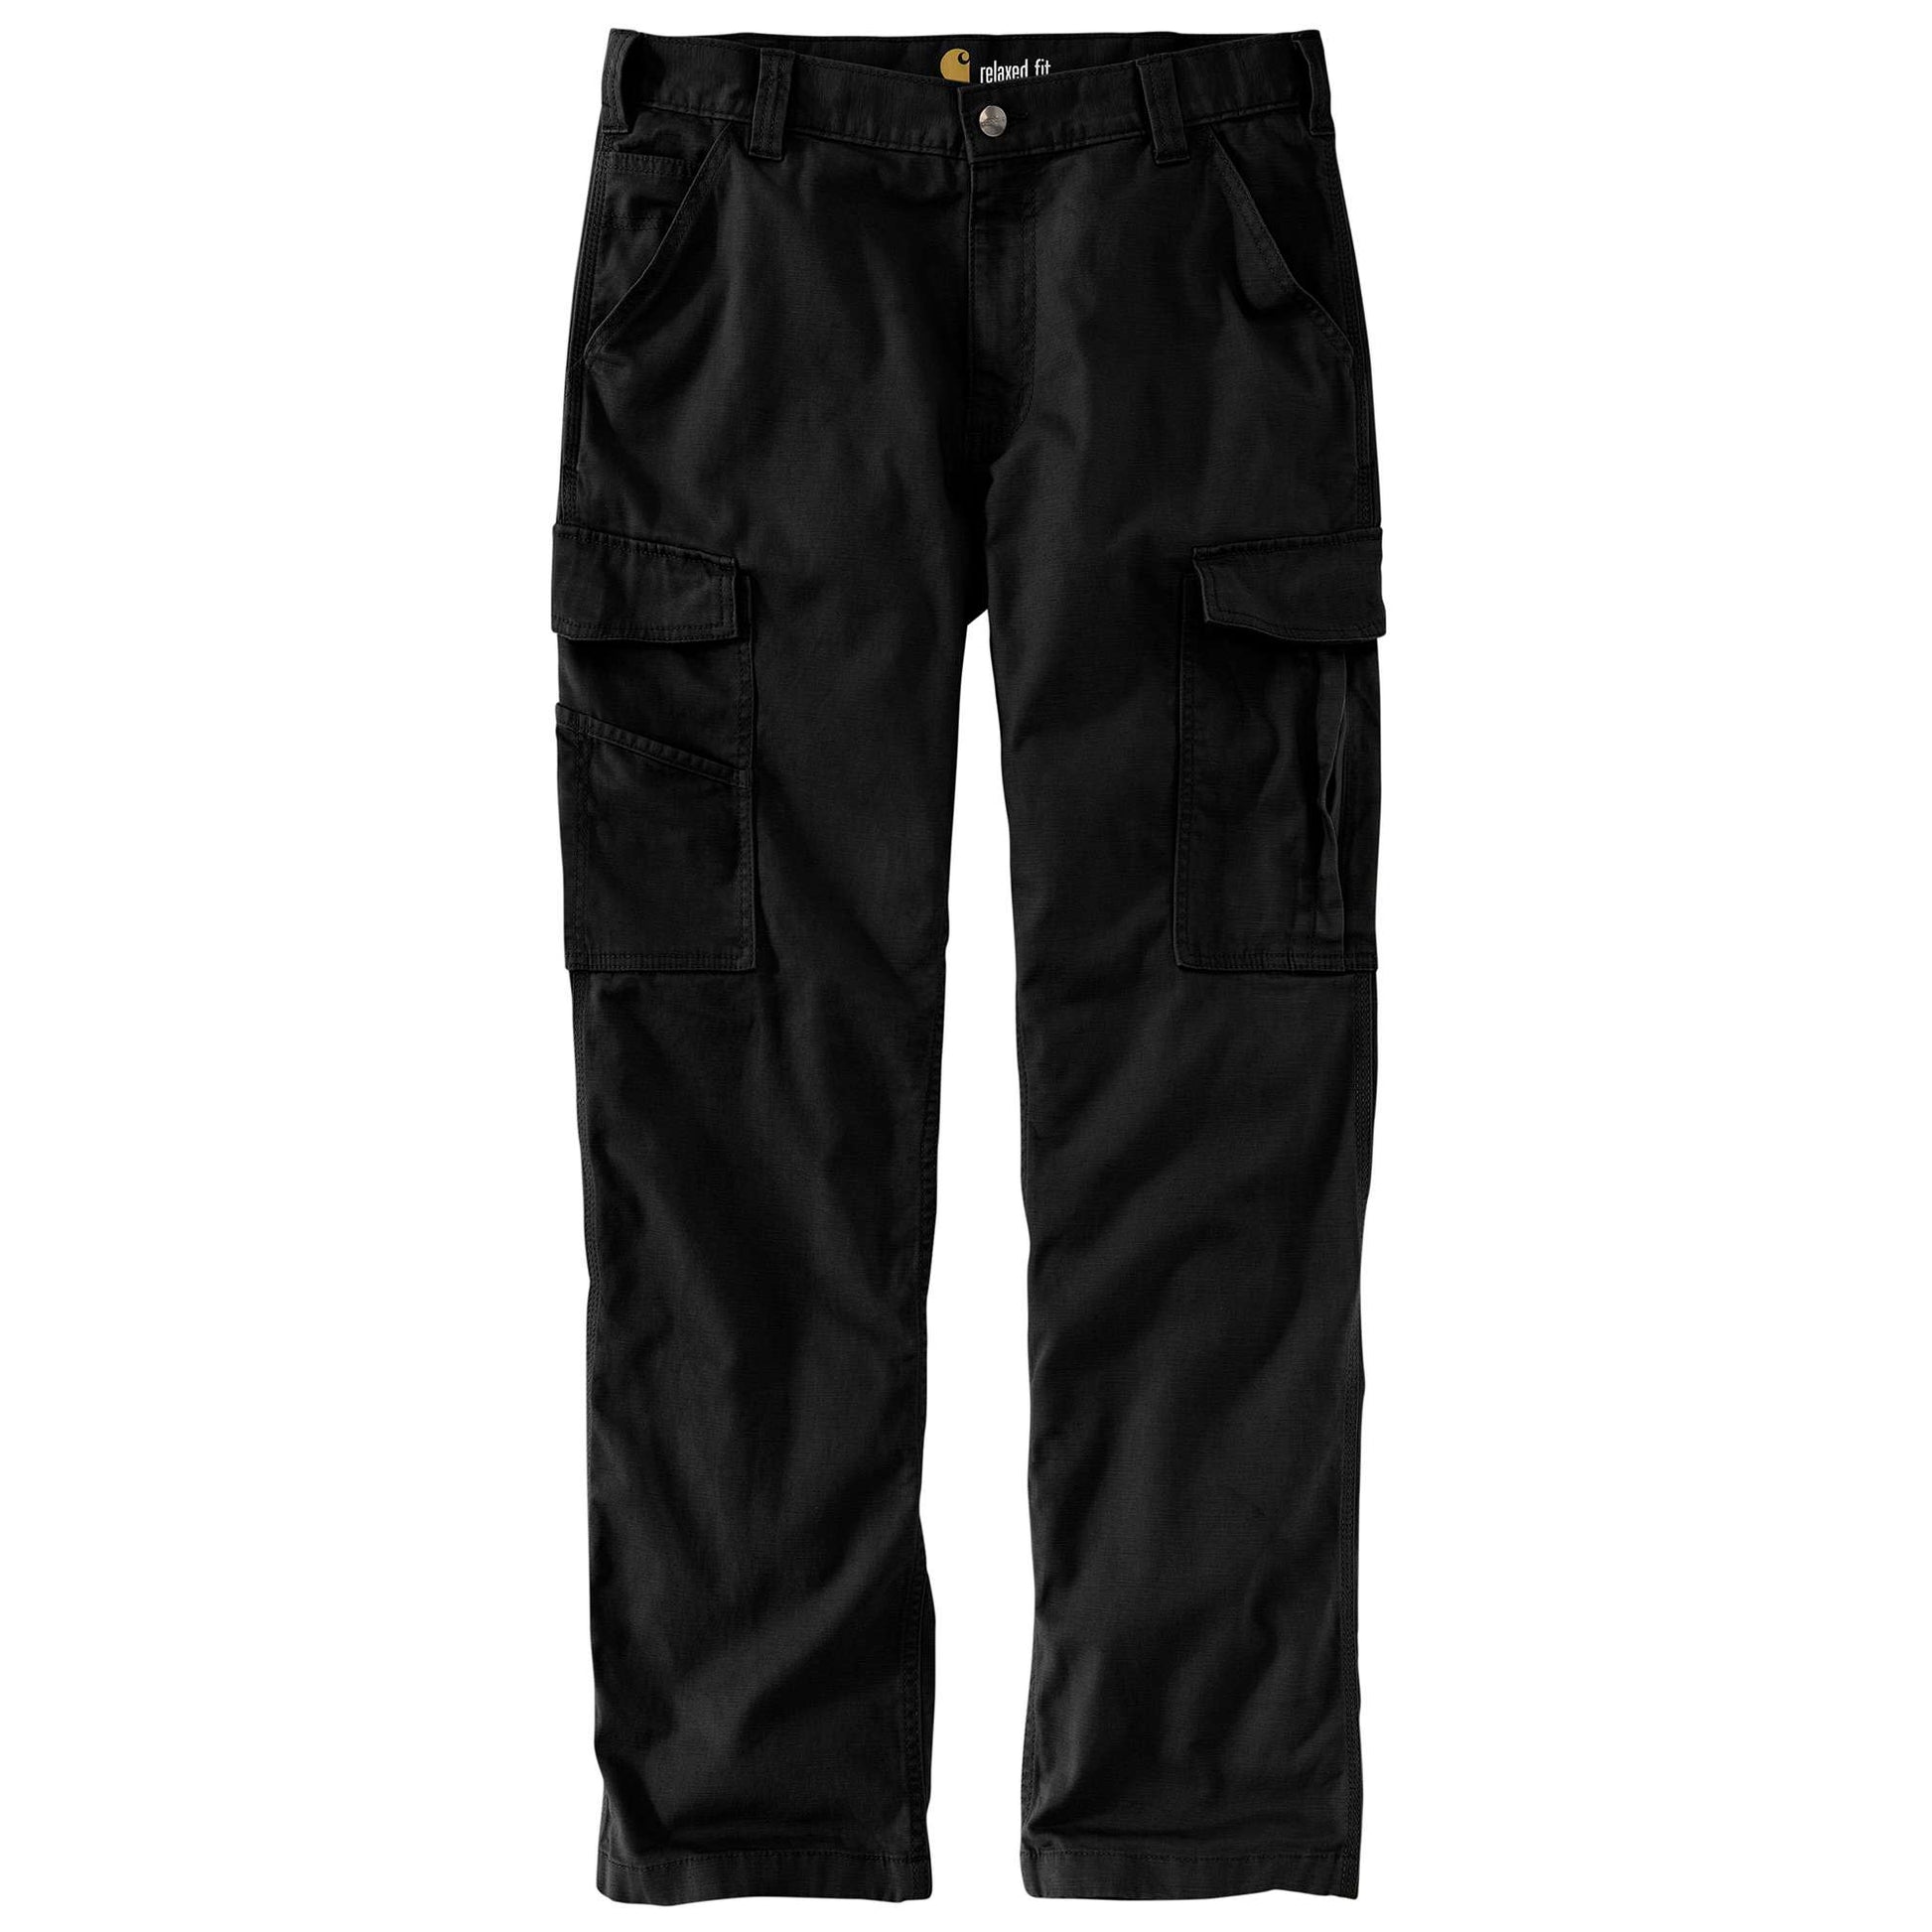 CARHARTT BLACK CARGO PANTS  Cargo pants outfit men, Pants outfit men, Carhartt  cargo pants